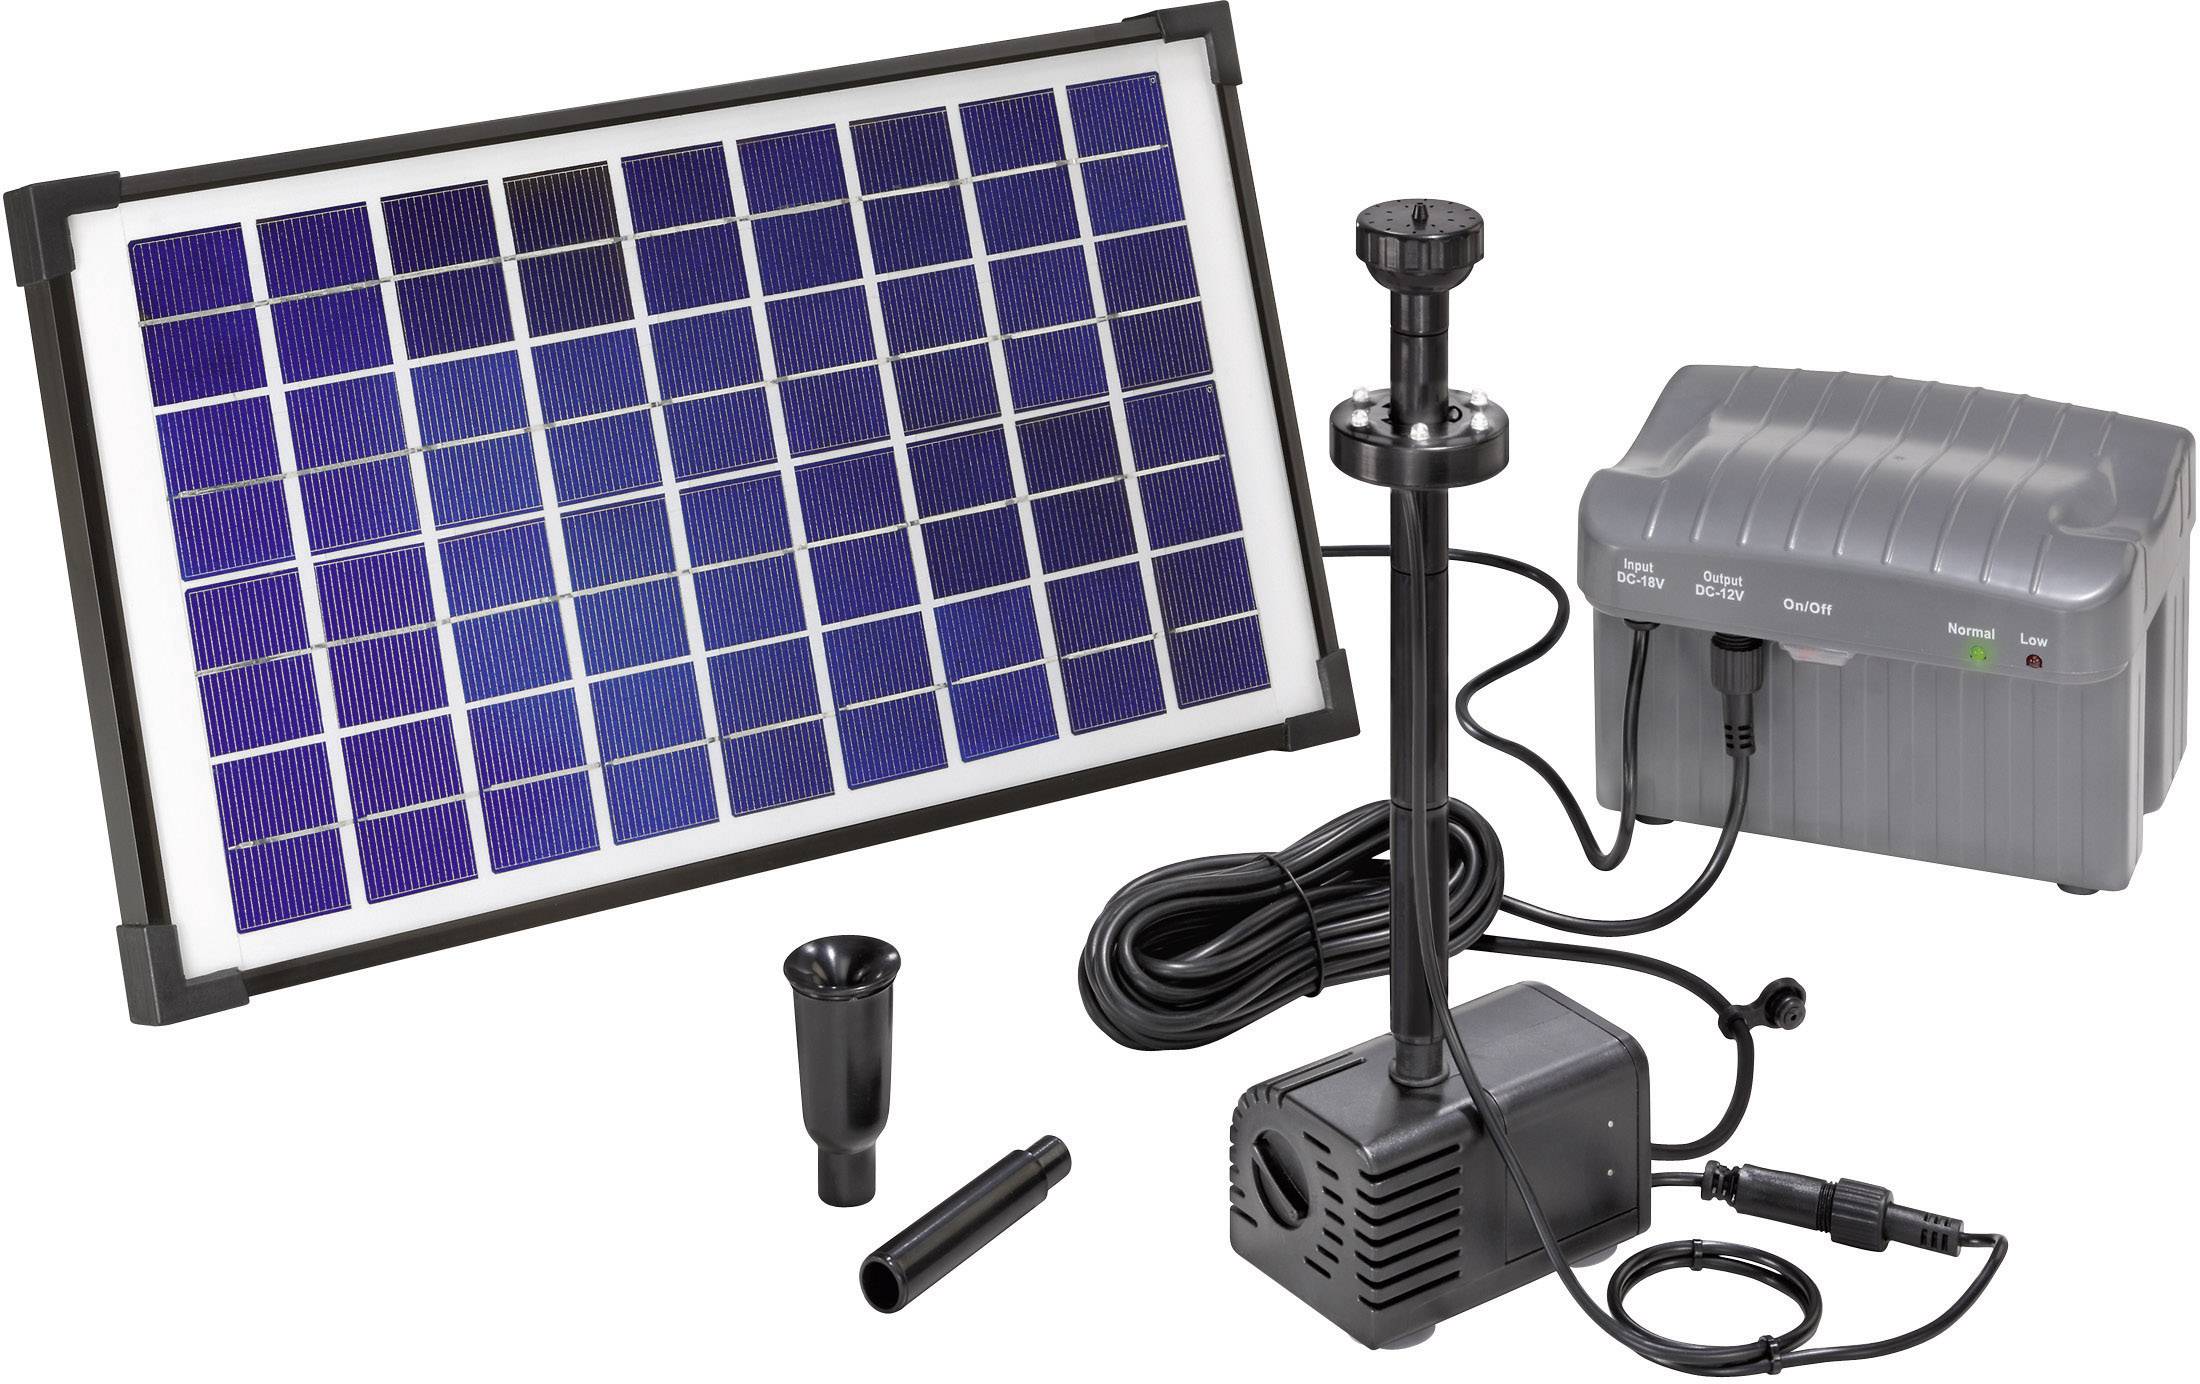 Esotec - Kit pompe solaire bassin Milano Led 20W avec batterie